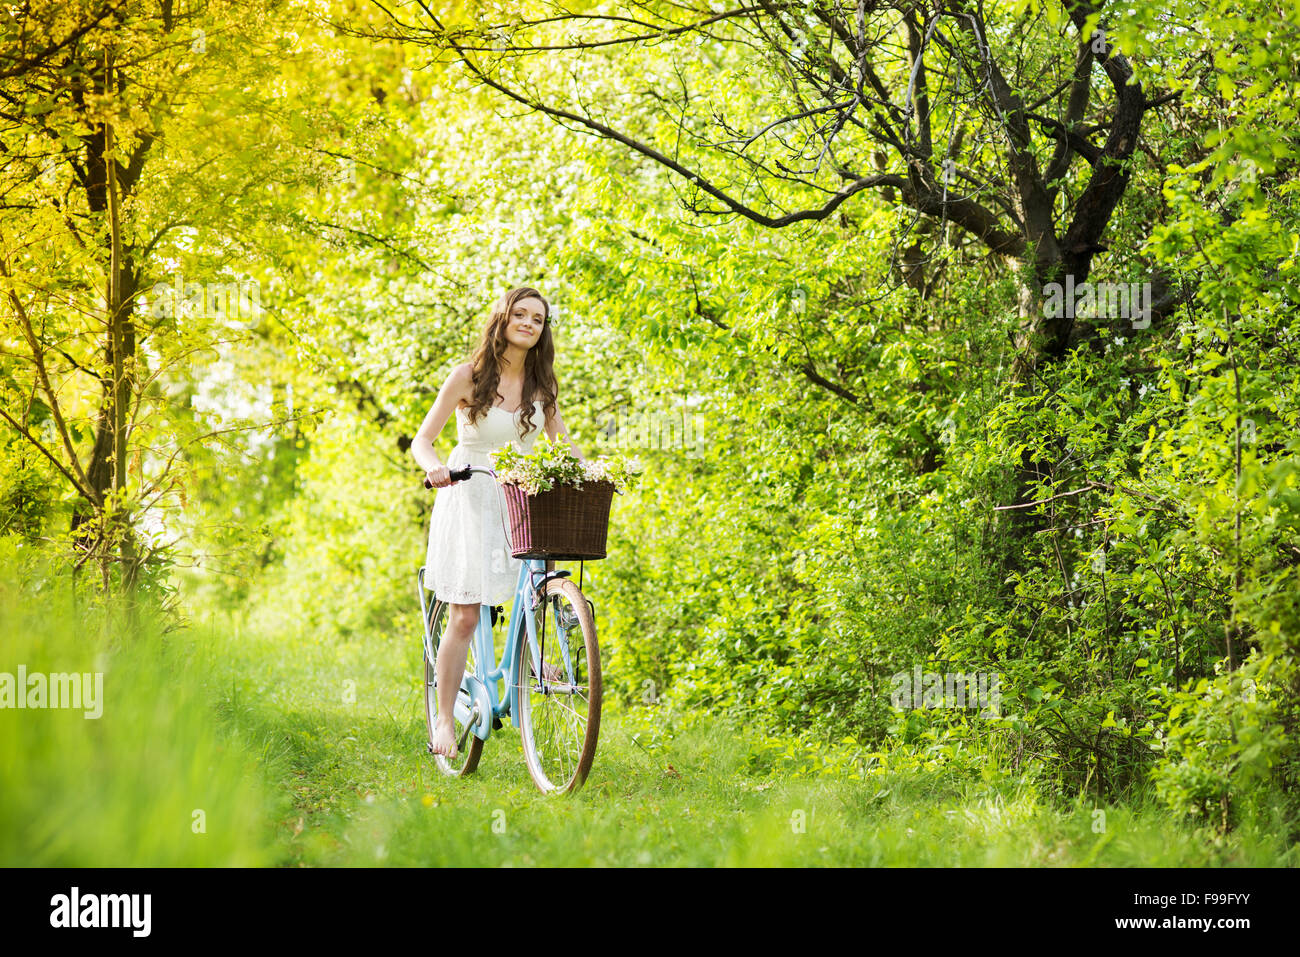 Pretty young woman riding retro bike in green park Stock Photo